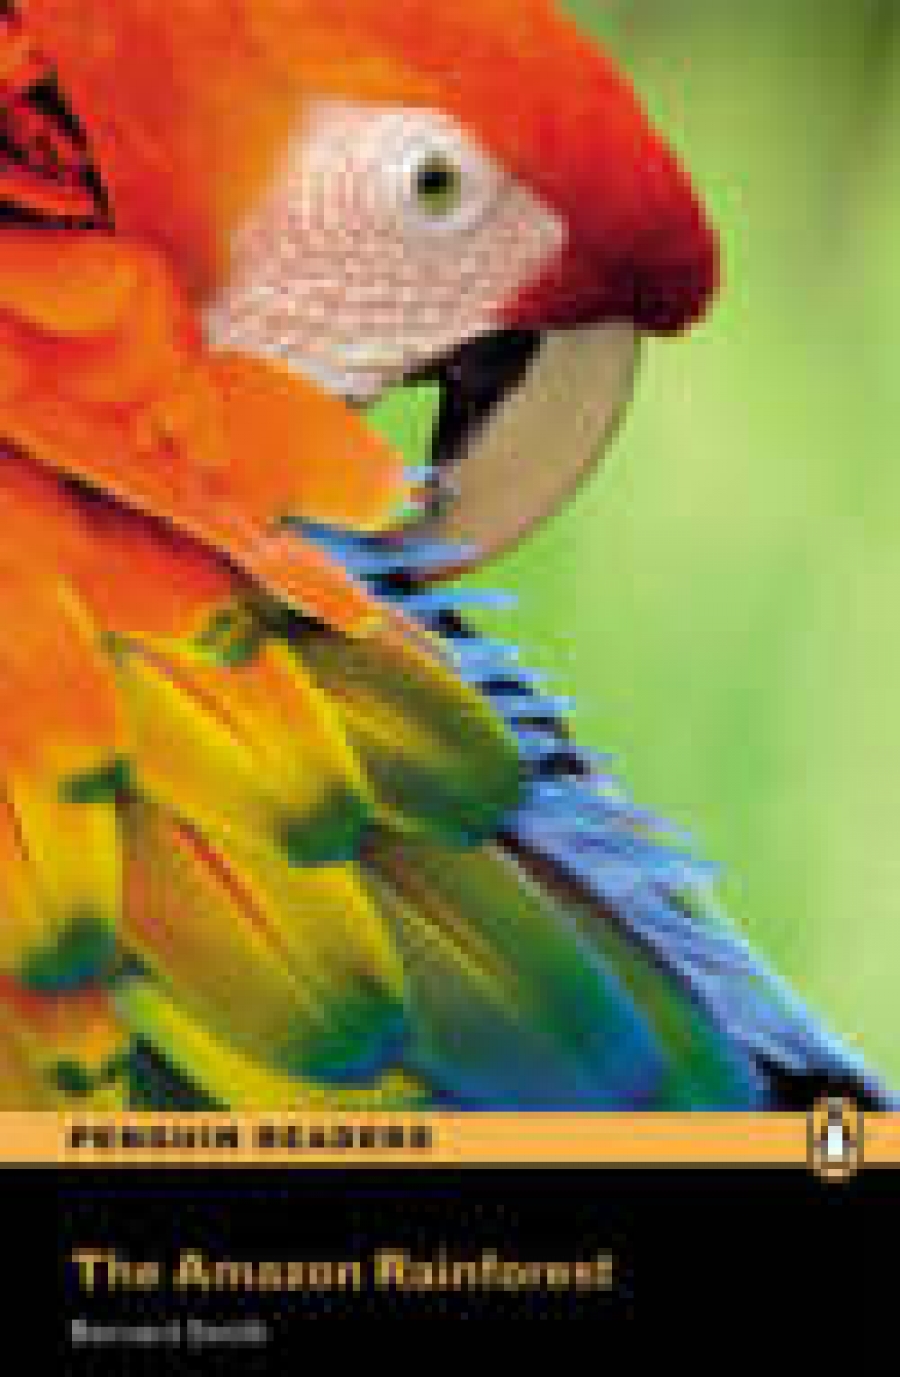 Bernard S. Penguin Readers 2: Amazon Rainforest 